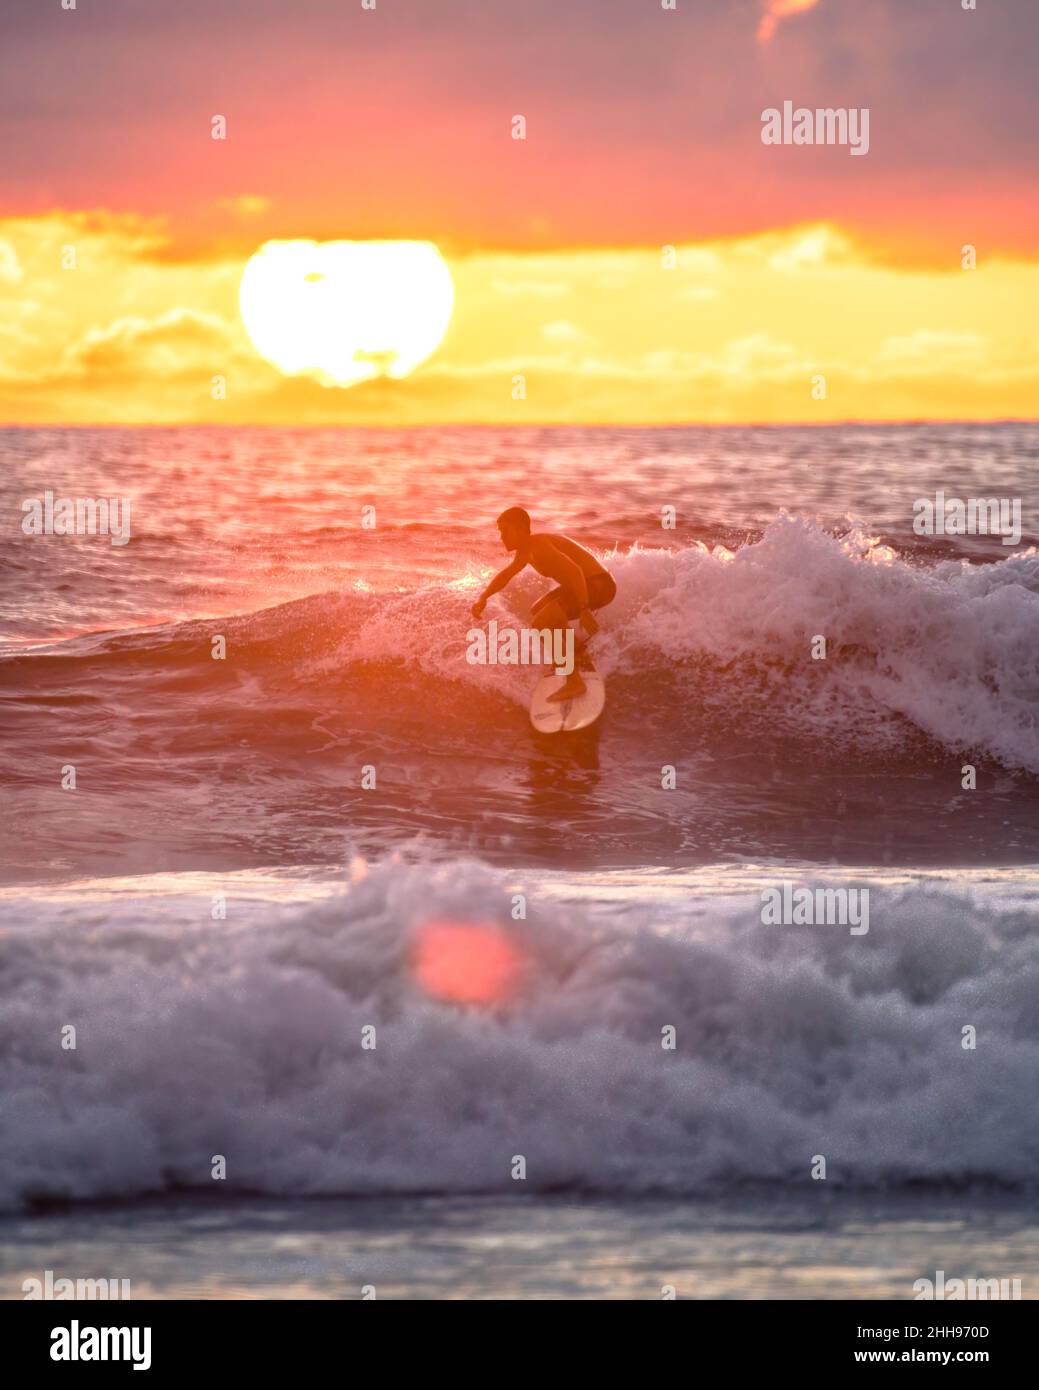 Taking waves and surfing, Pura vida Costa Rica Stock Photo